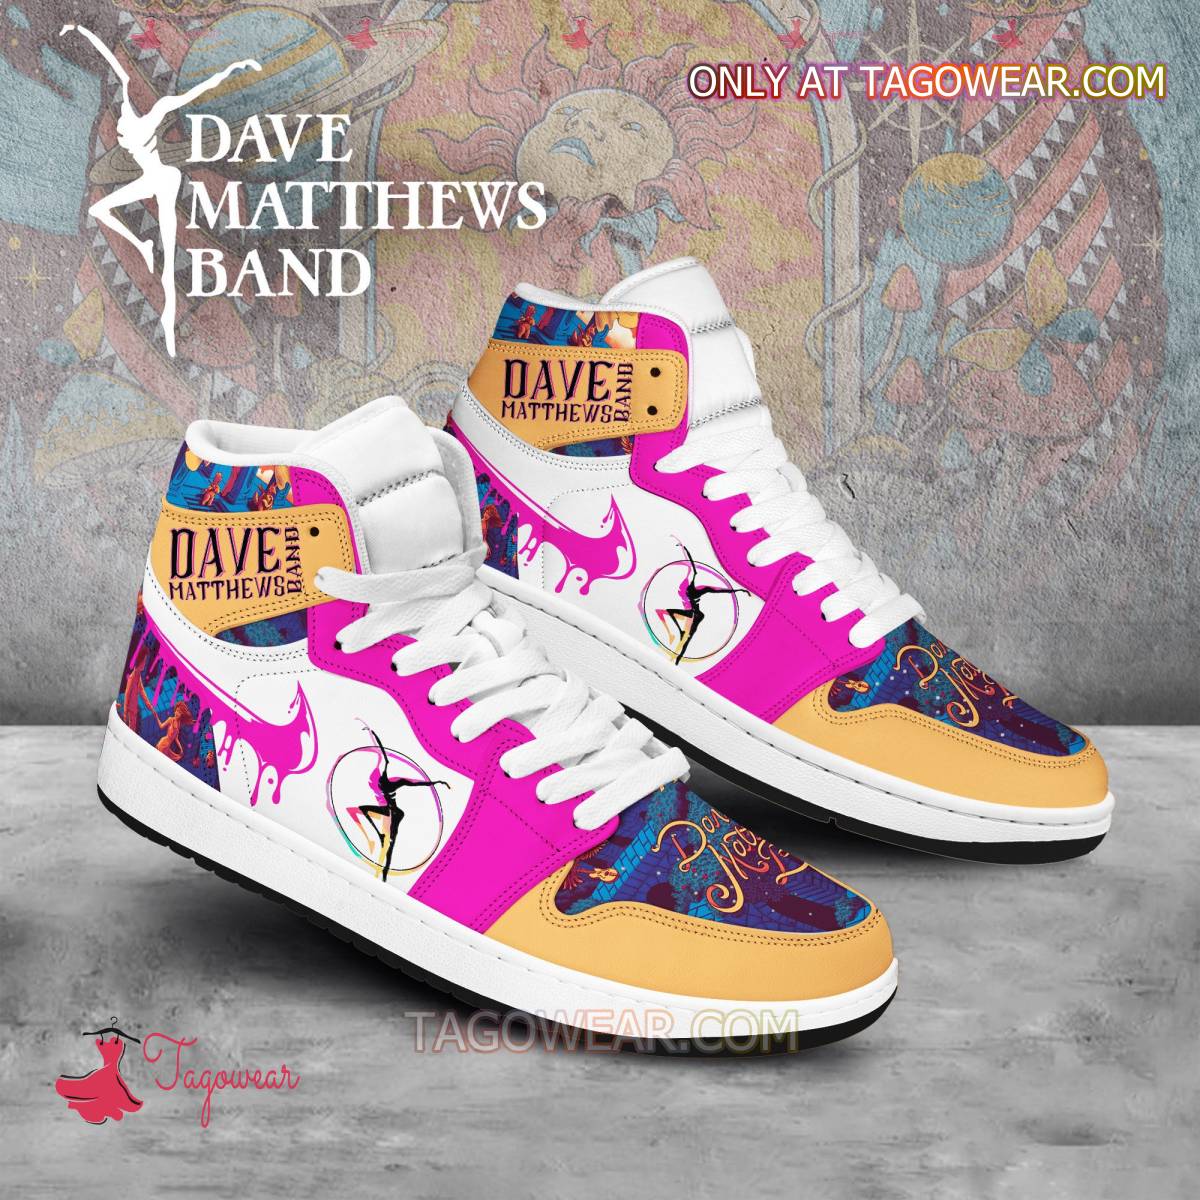 Dave Matthews Band Music Air Jordan High Top Shoes